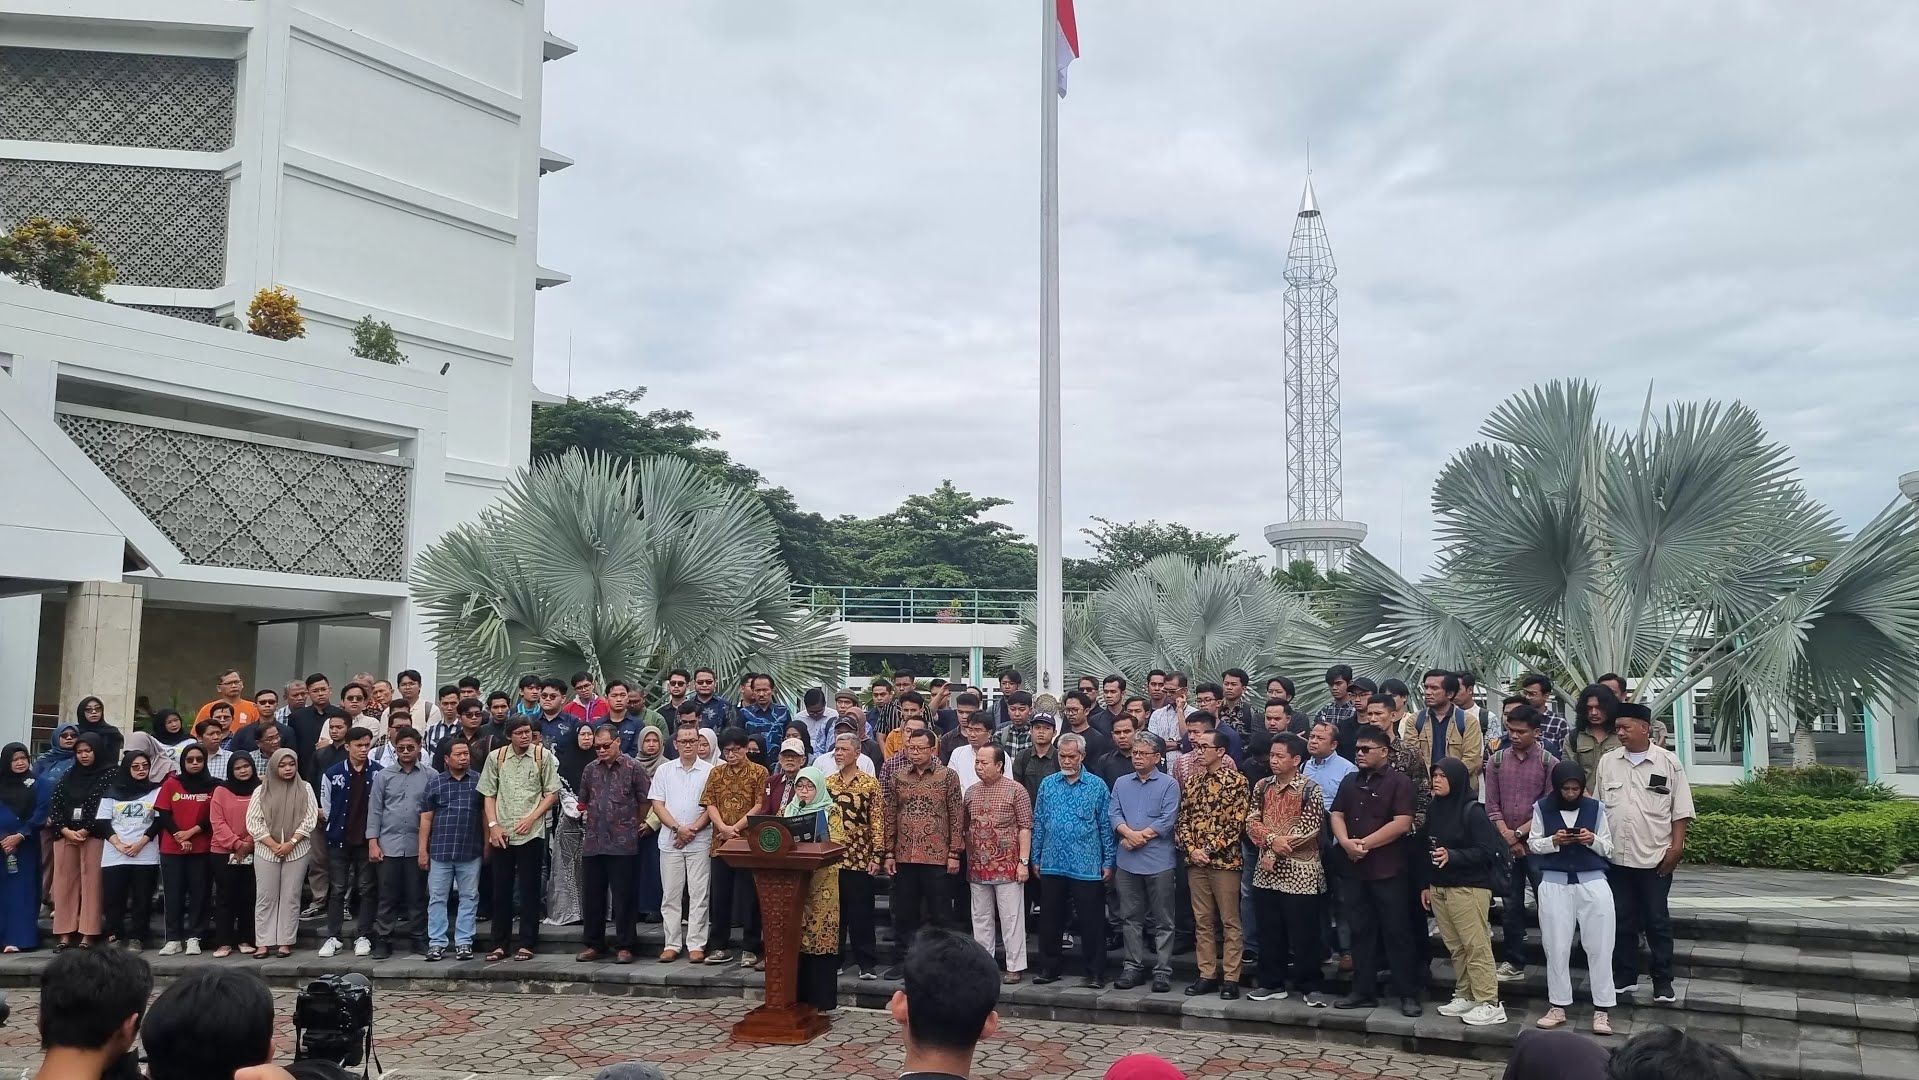 UYM Kritik Pemerintah Jokowi, Mulai dari KPK Dikebiri, Pejabat Doyan Korupsi hingga Ambisi Berkuasa dan Hilangnya Etika